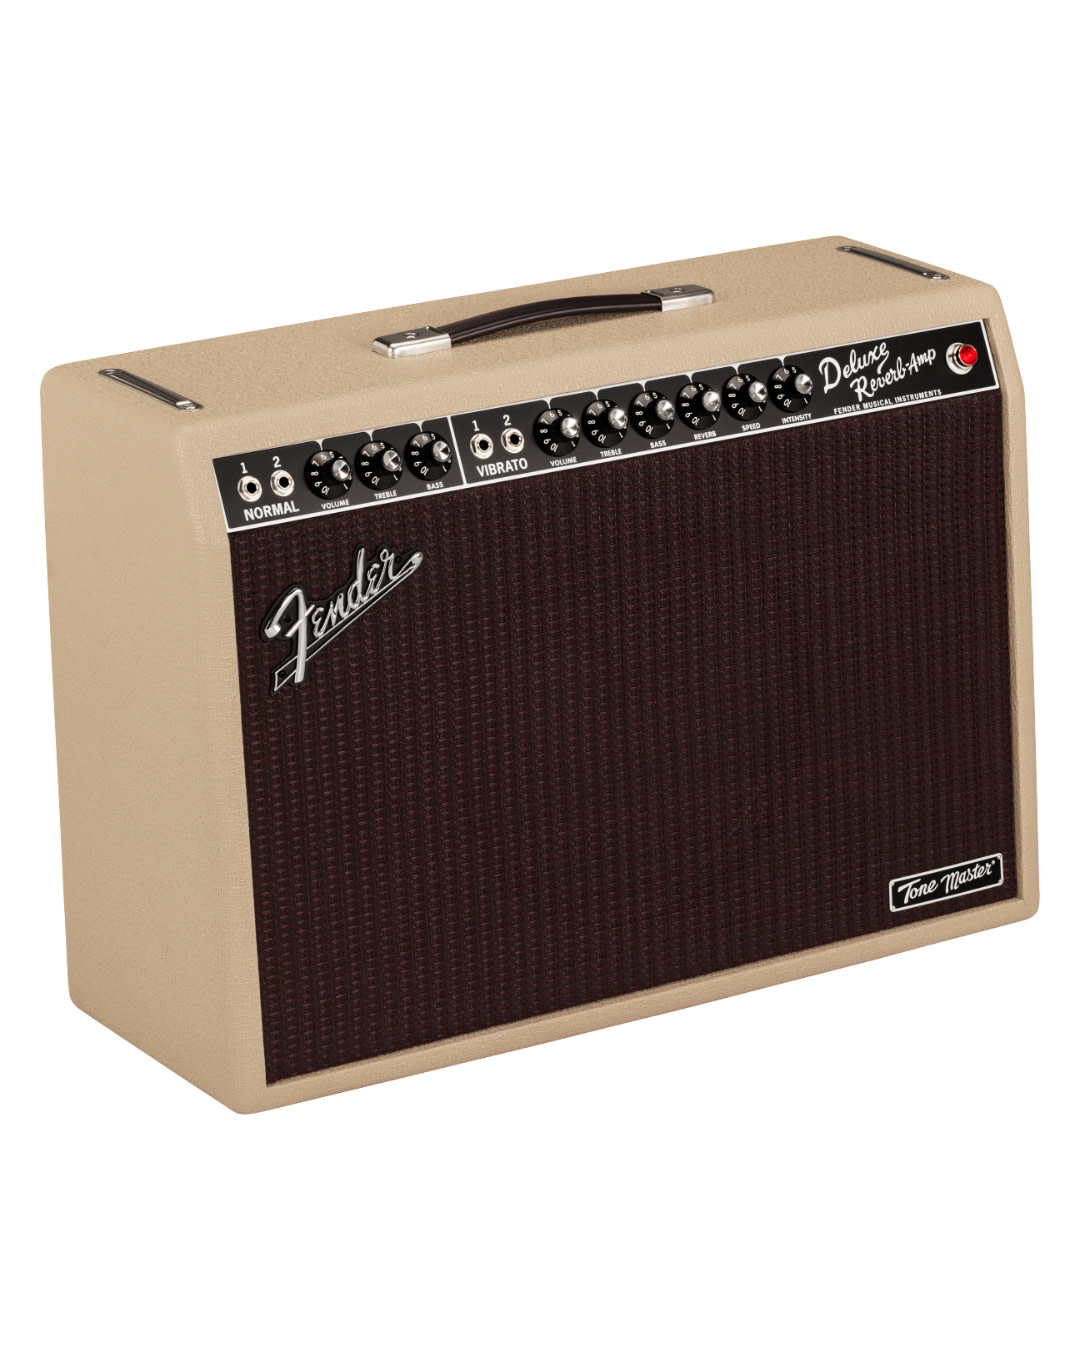 Fender Tone Master Deluxe Reverb Guitar Amplifier - Blonde (2274100982)